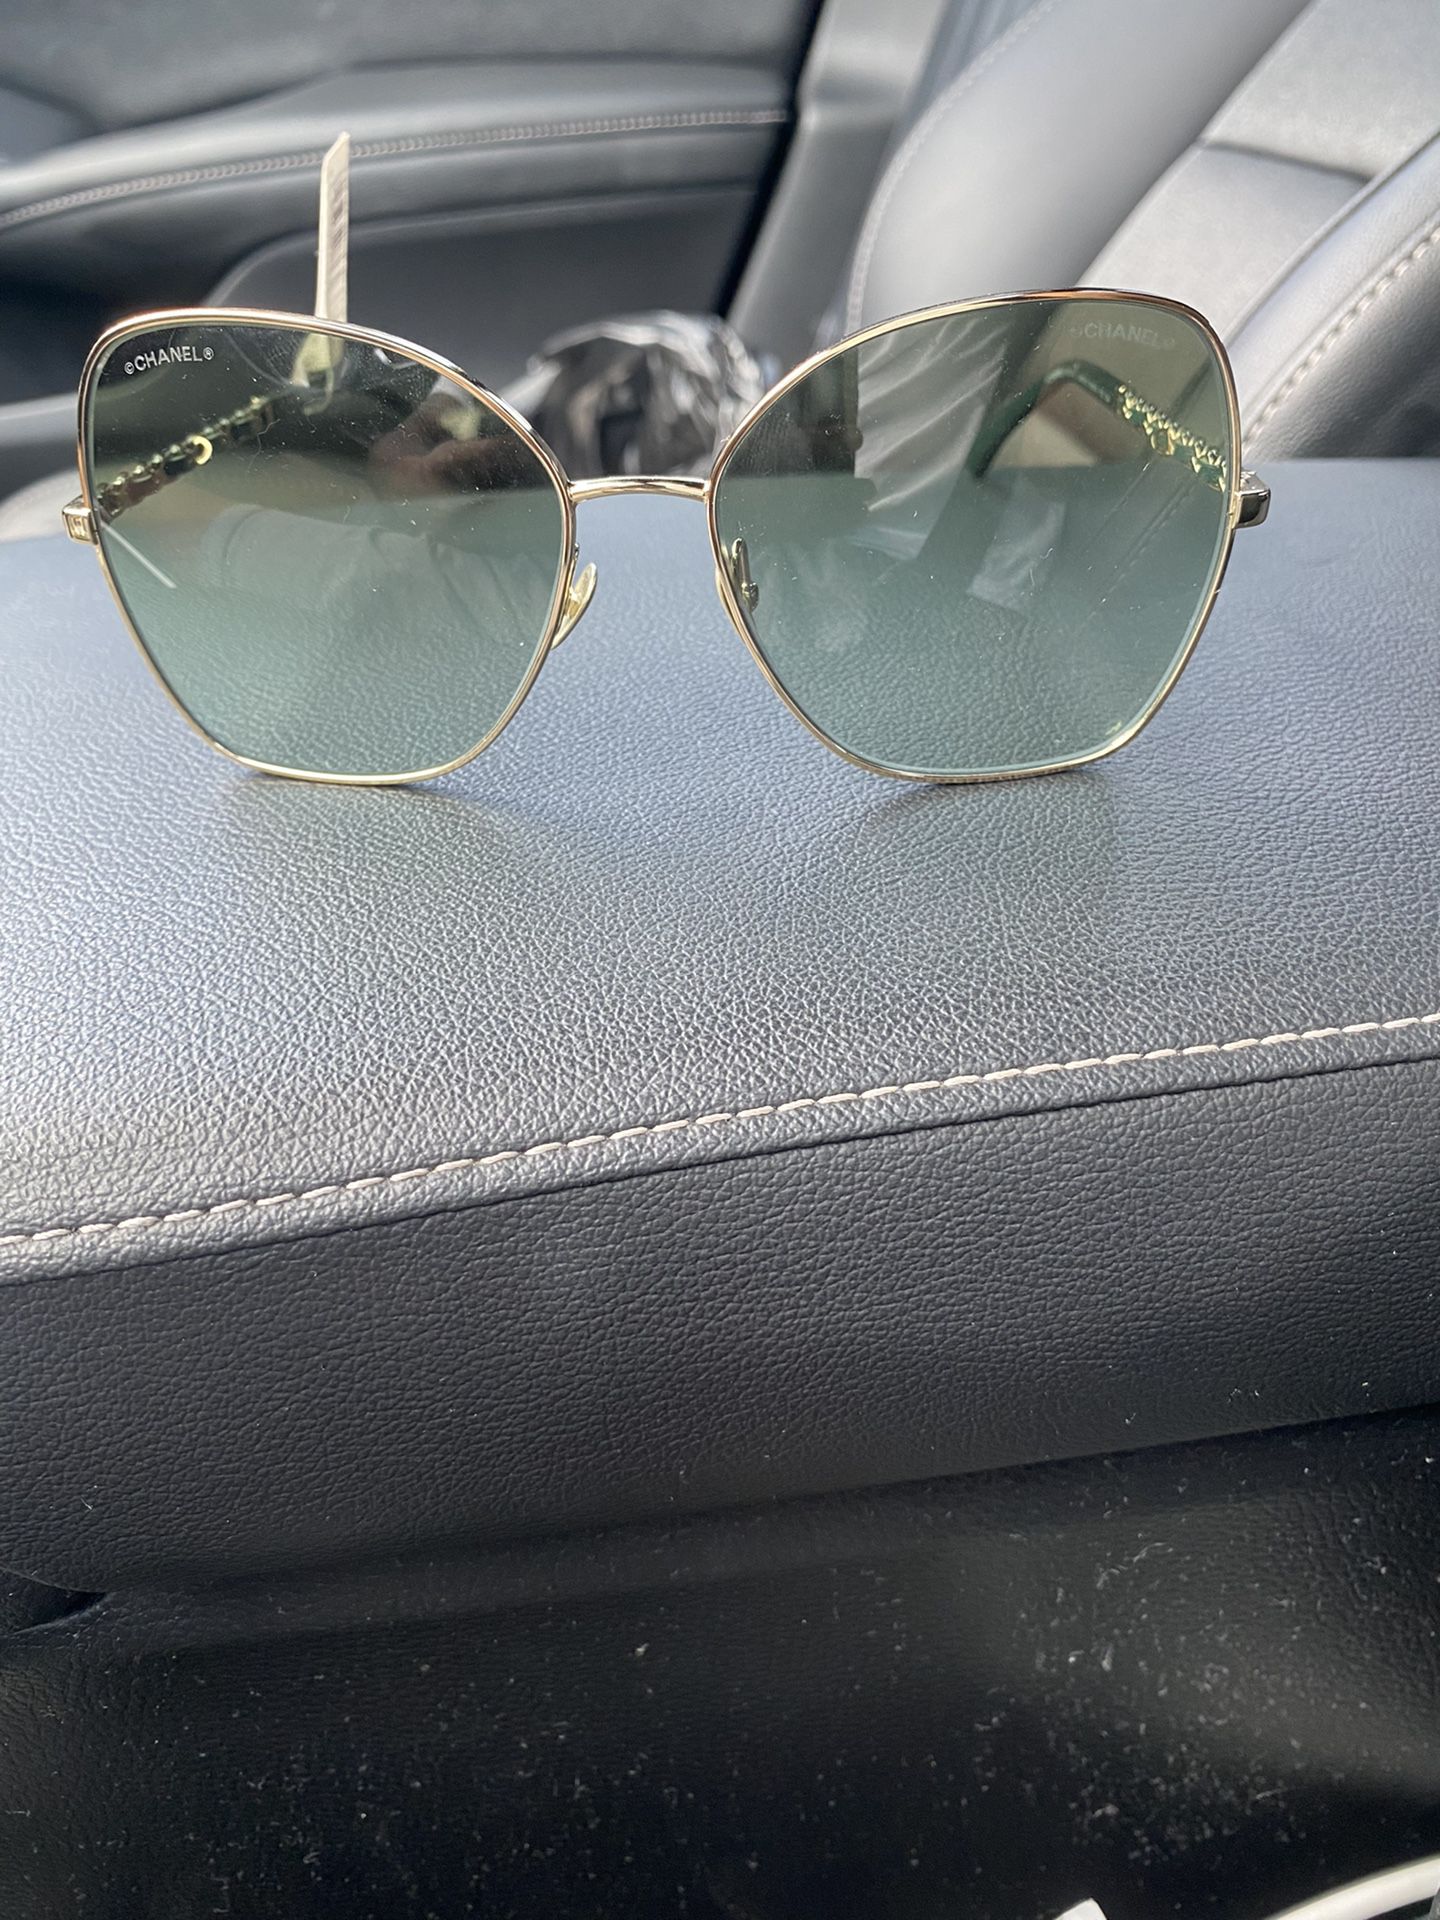 Chanel sun glasses for women for Sale in Sanford, FL - OfferUp